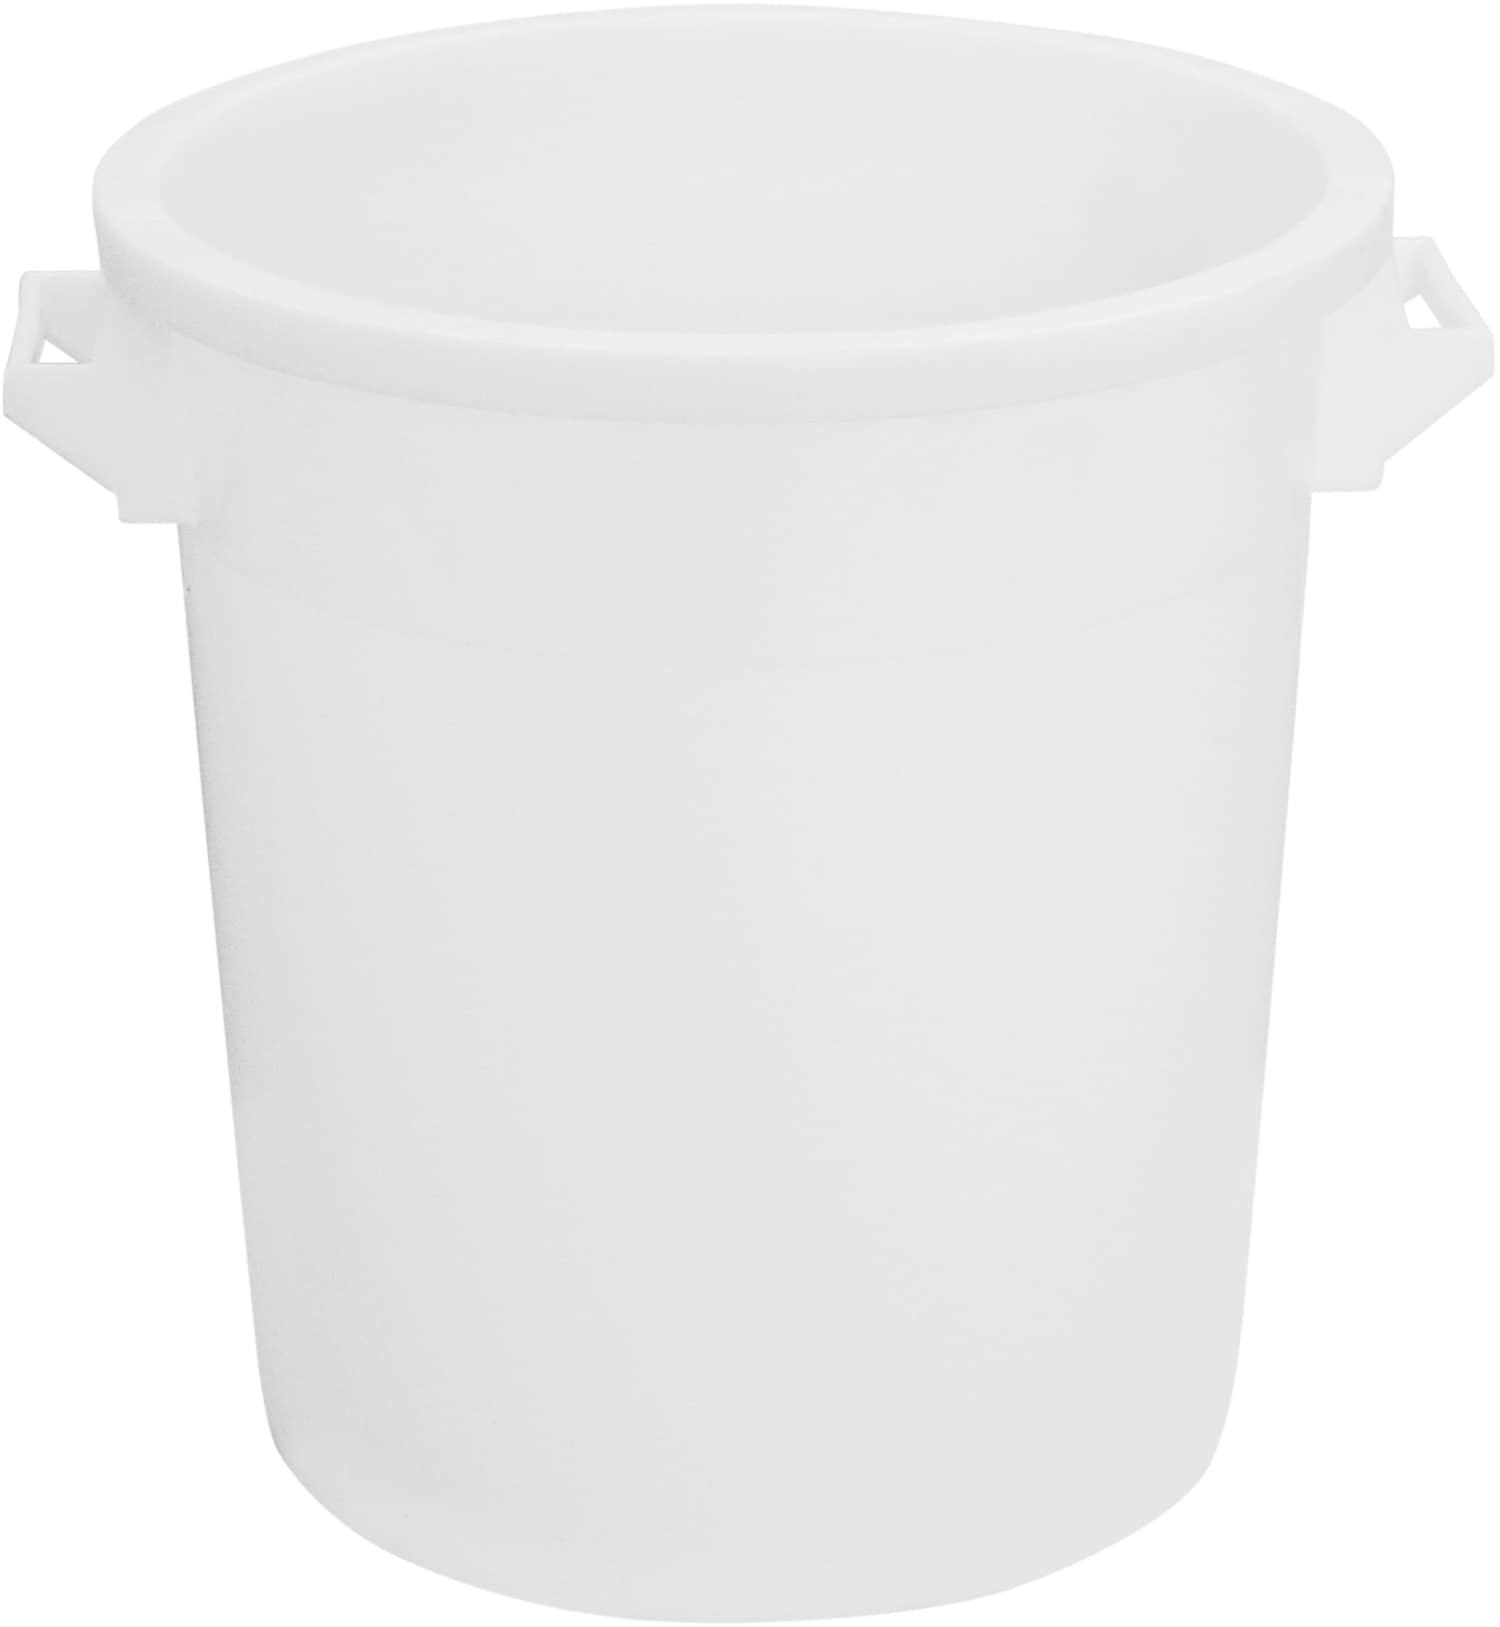 Bucket with 2 handles